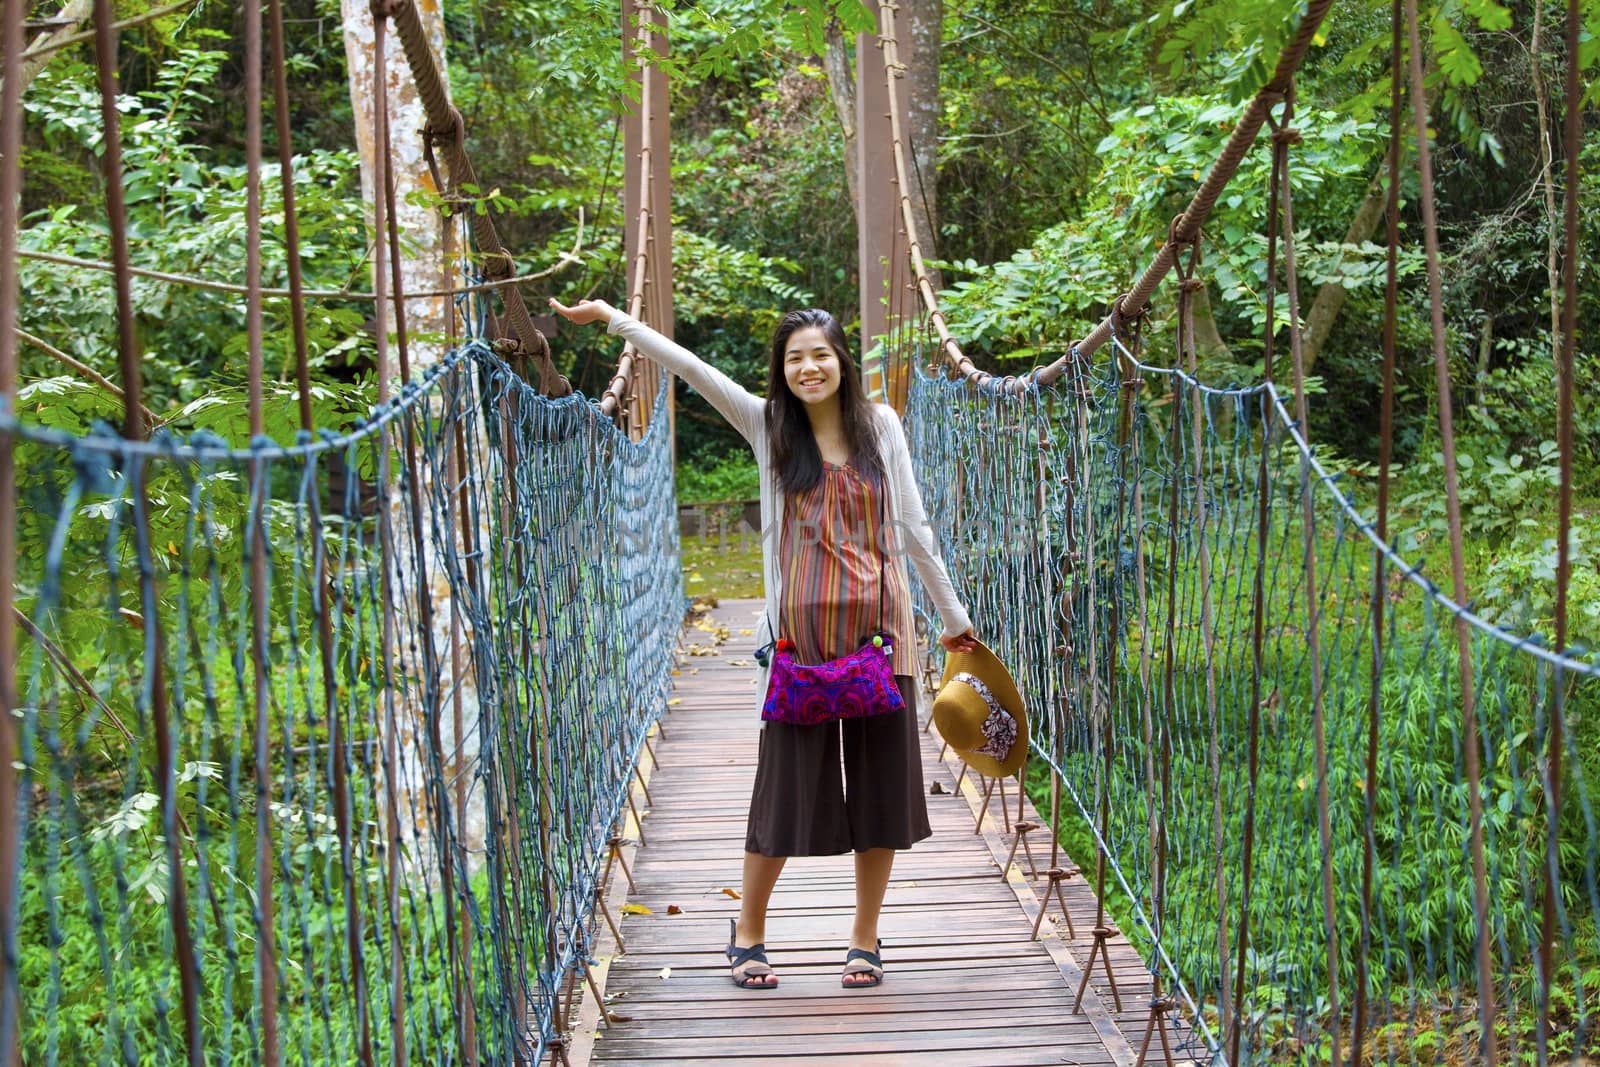 Biracial teen girl waving arm on wooden hanging bridge